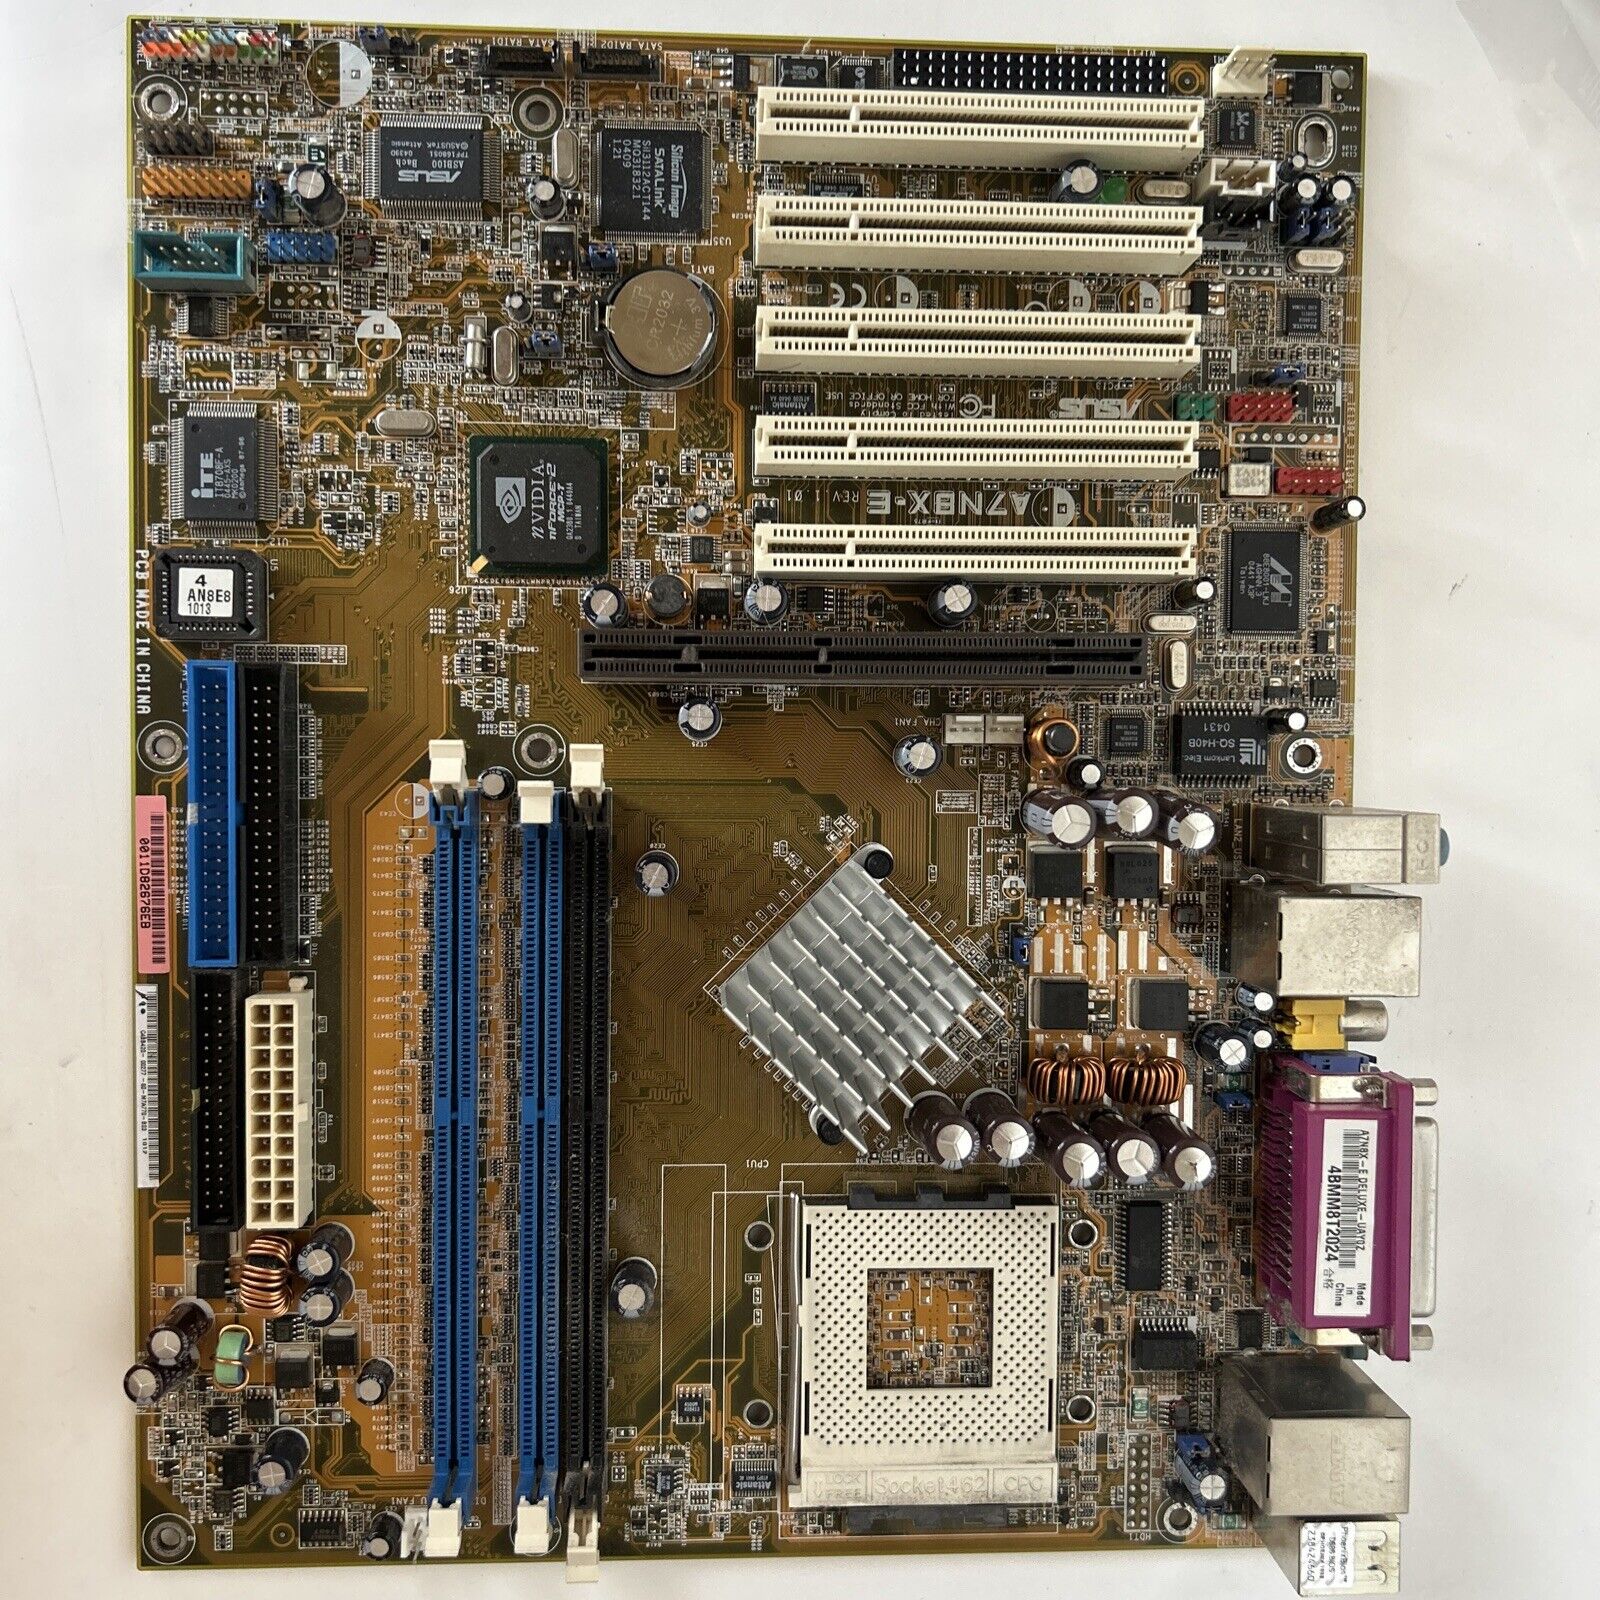 ASUS A7N8X-E Deluxe Rev. 1.01 Socket 462 DDR1 AMD Athlon 